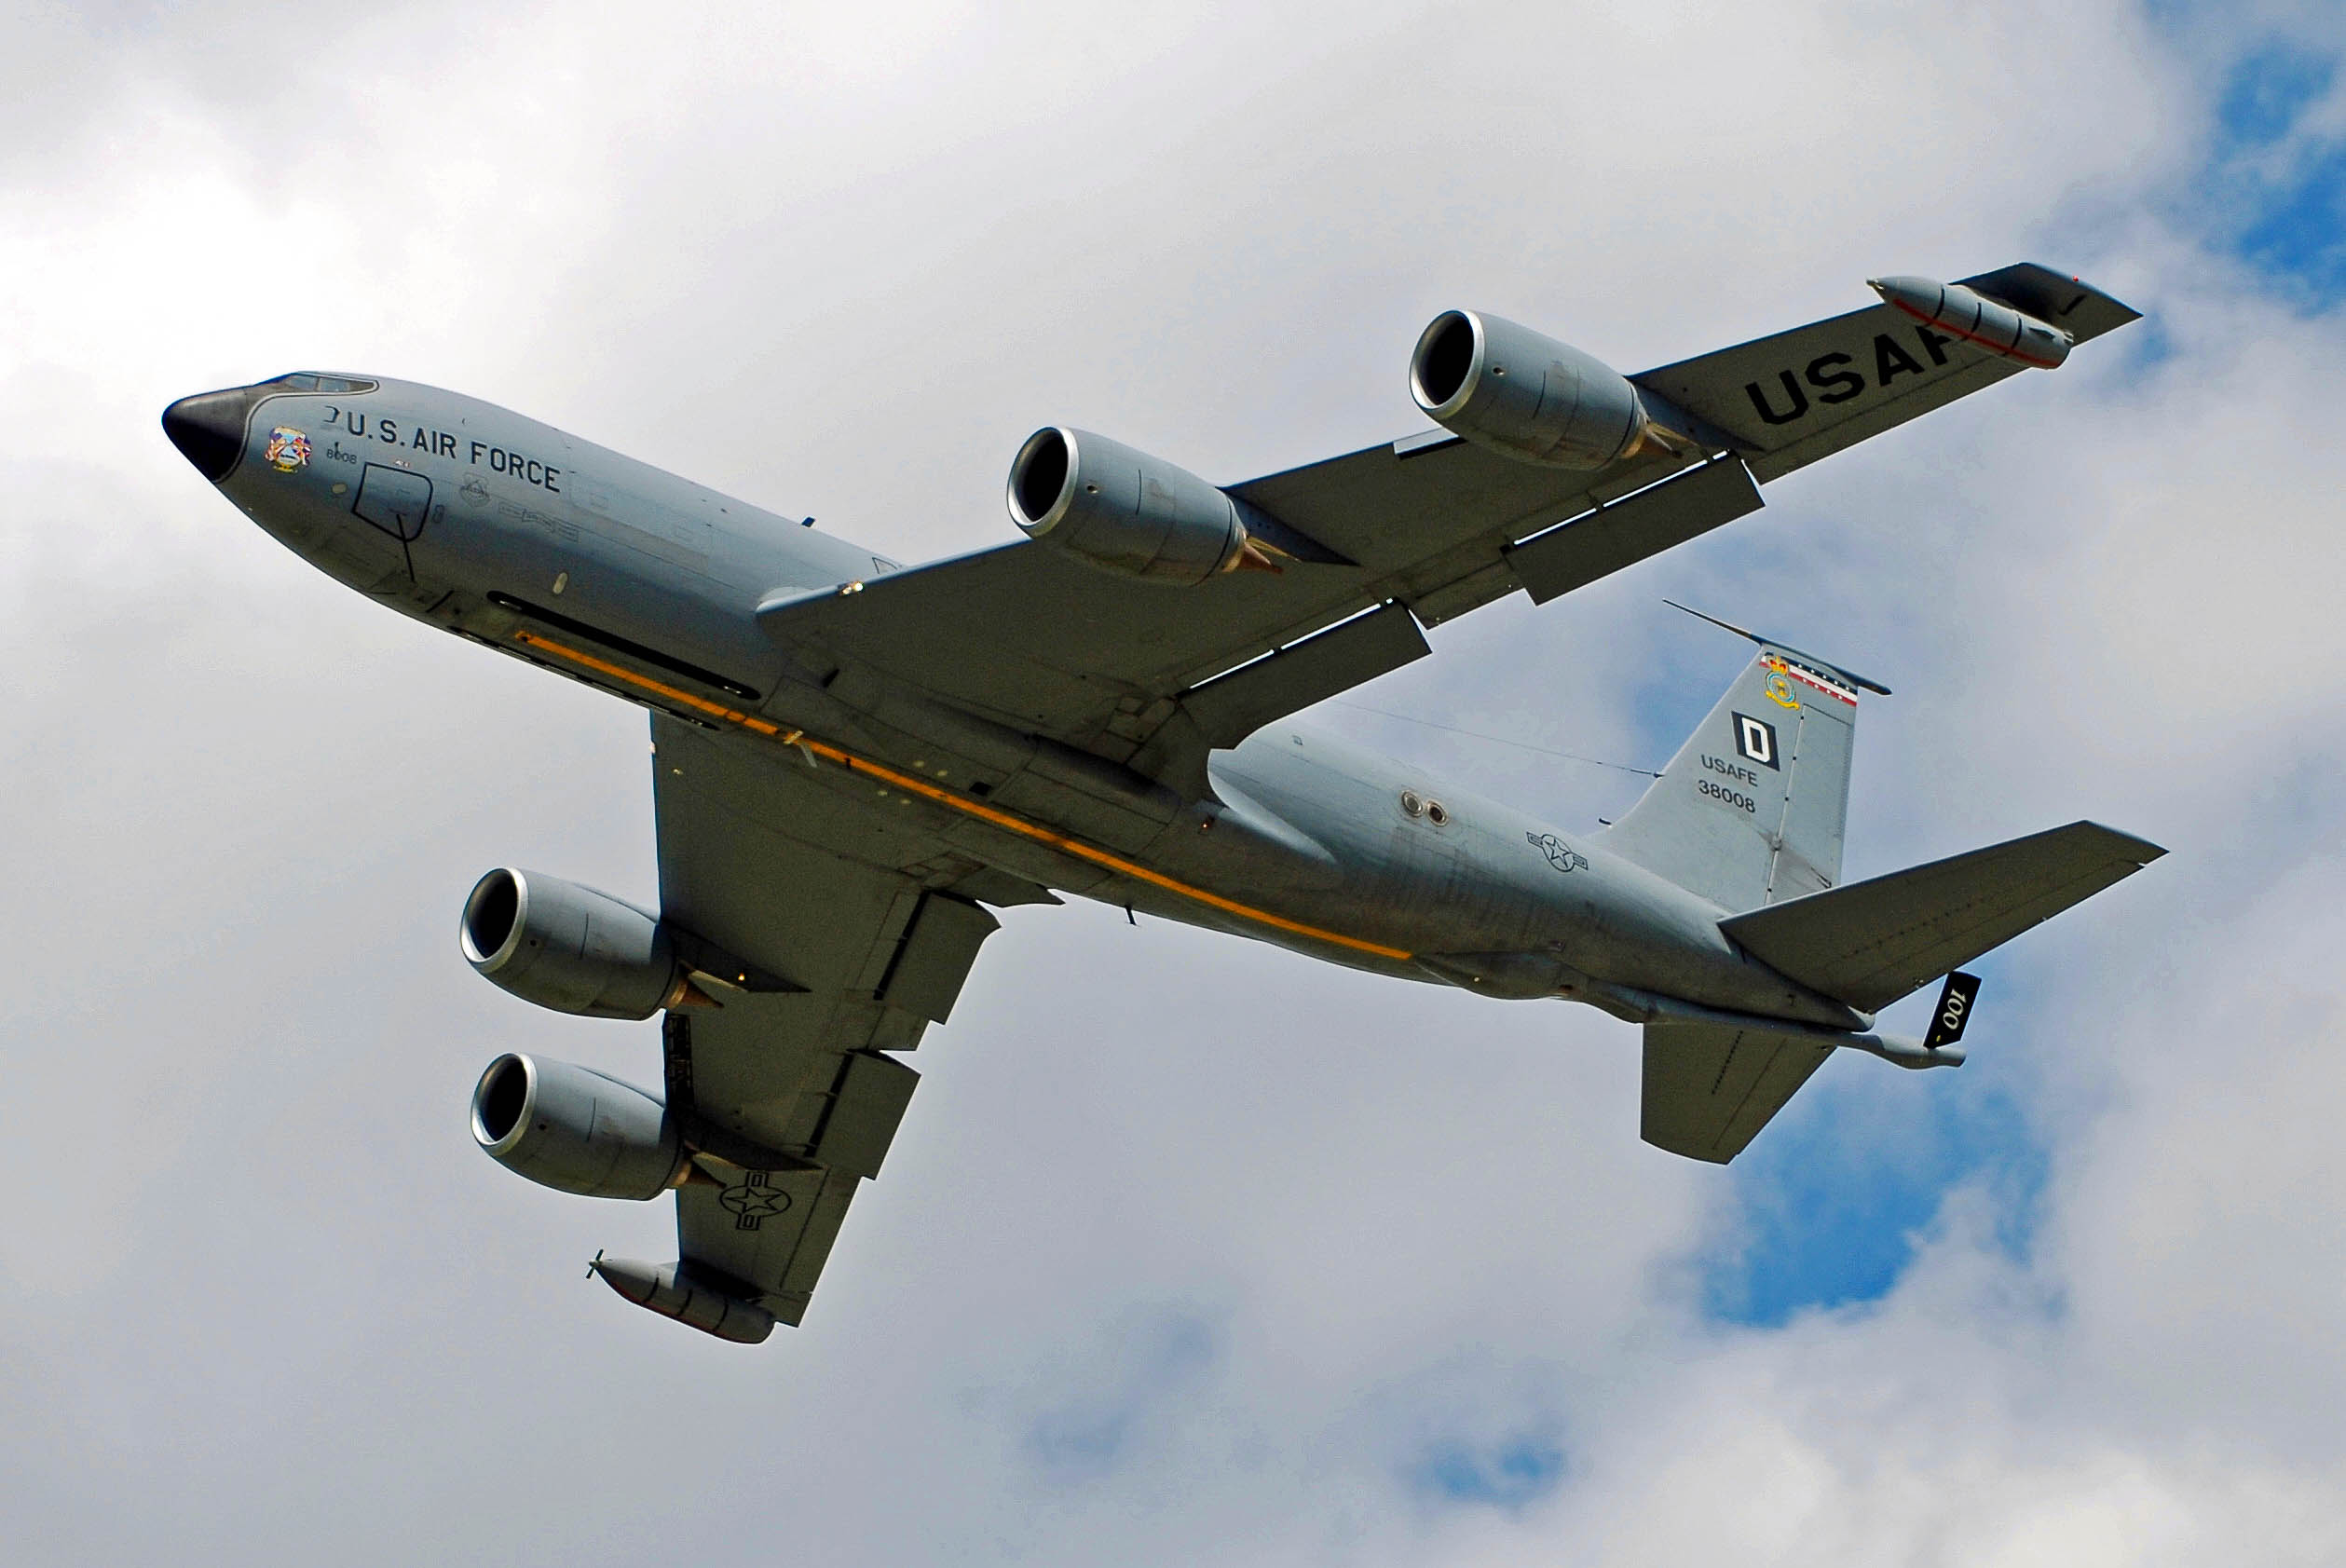 63-8008/638008 USAF - United States Air Force Boeing C-135 Stratotanker Airframe Information - AVSpotters.com